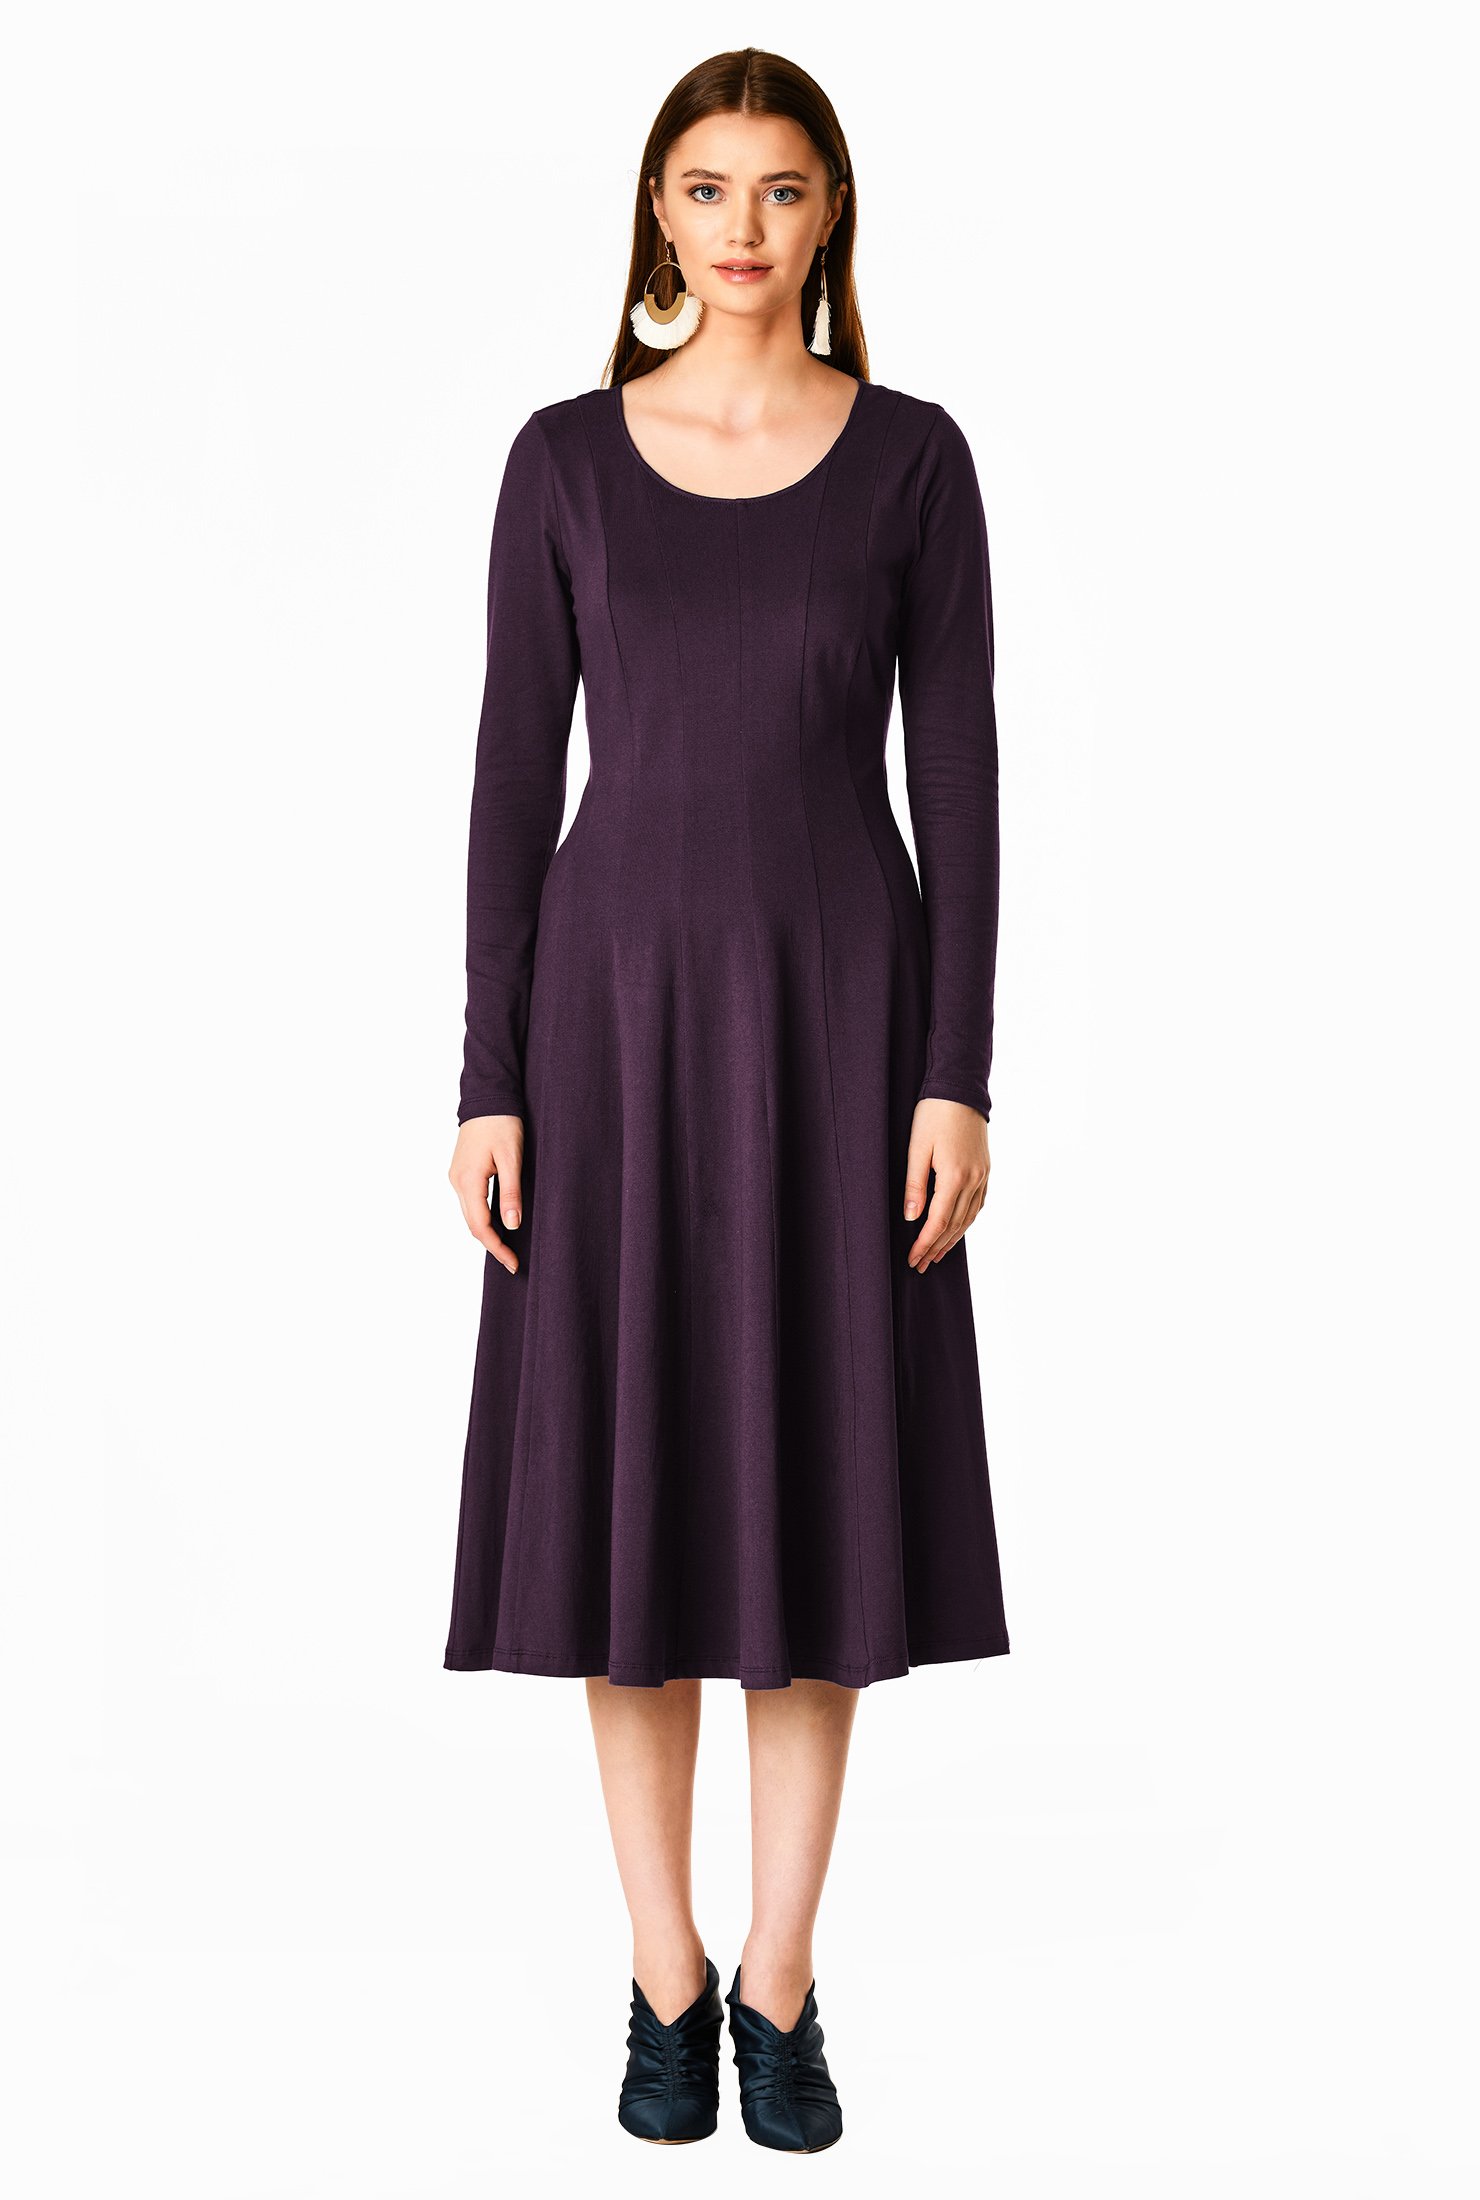 Shop Fit-and-flare cotton knit dress | eShakti